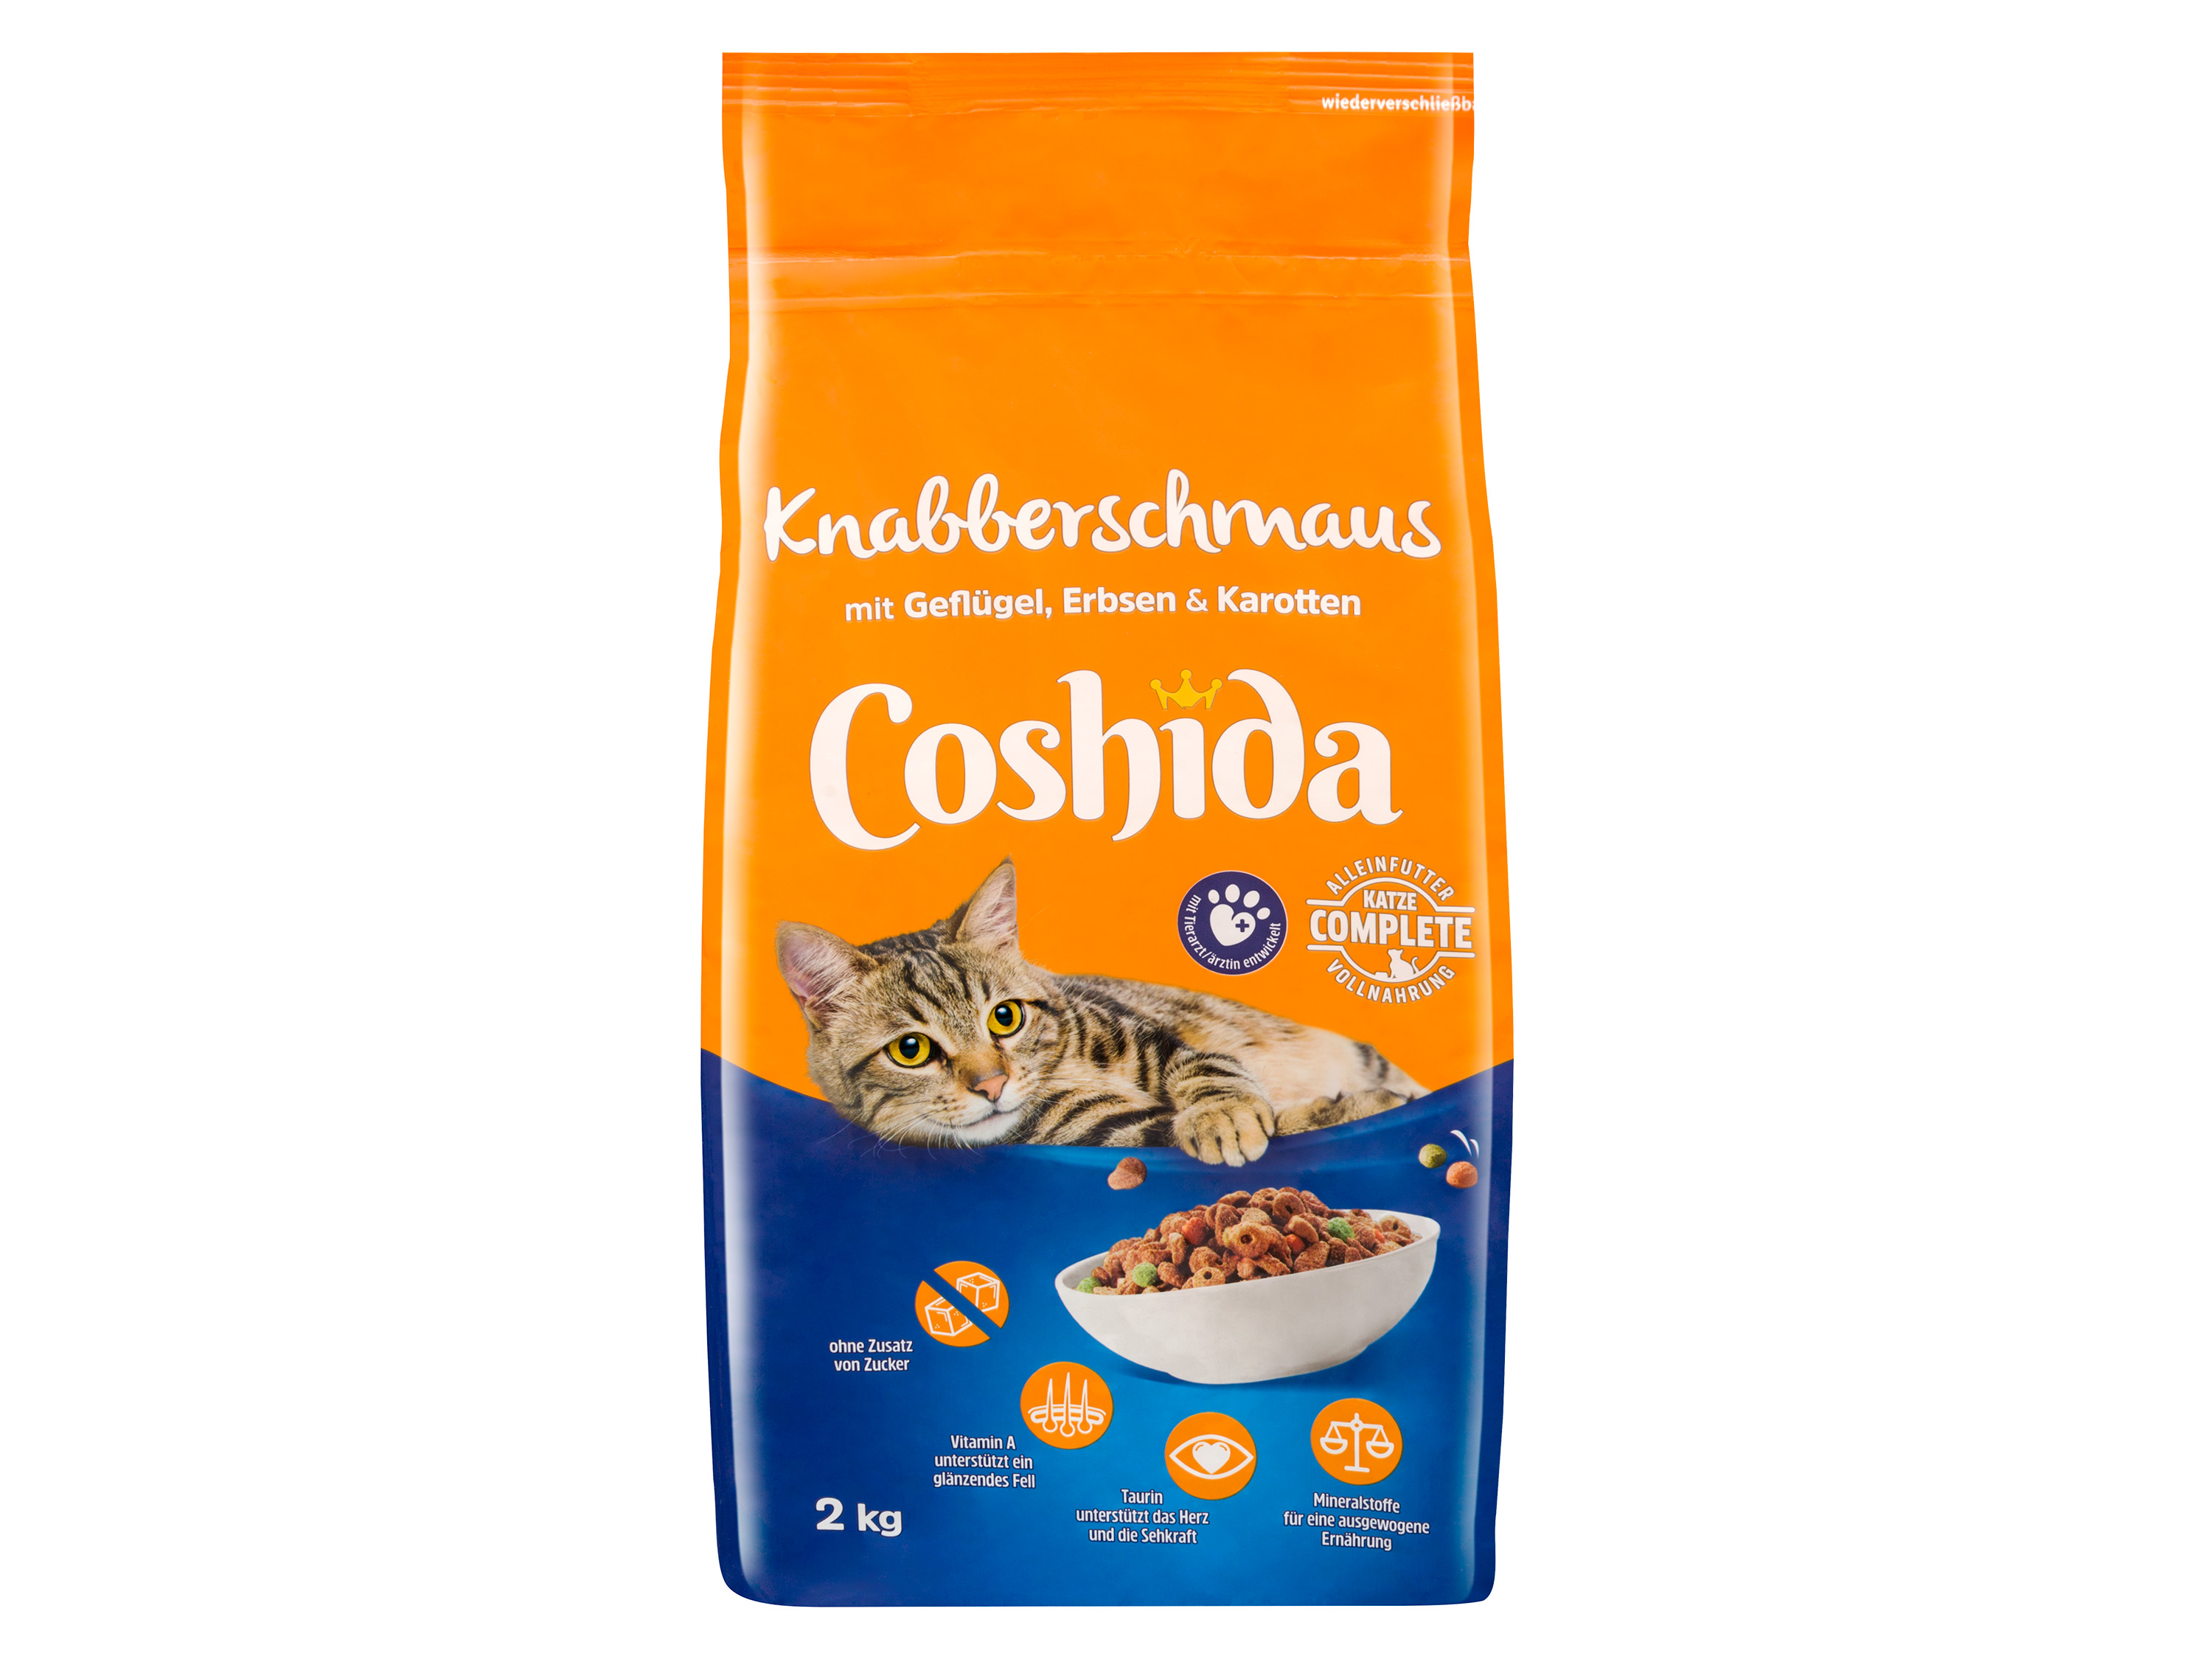 COSHIDA Katzentrockenfutter Geflügel, Erbsen & Karotten, 3x 2kg